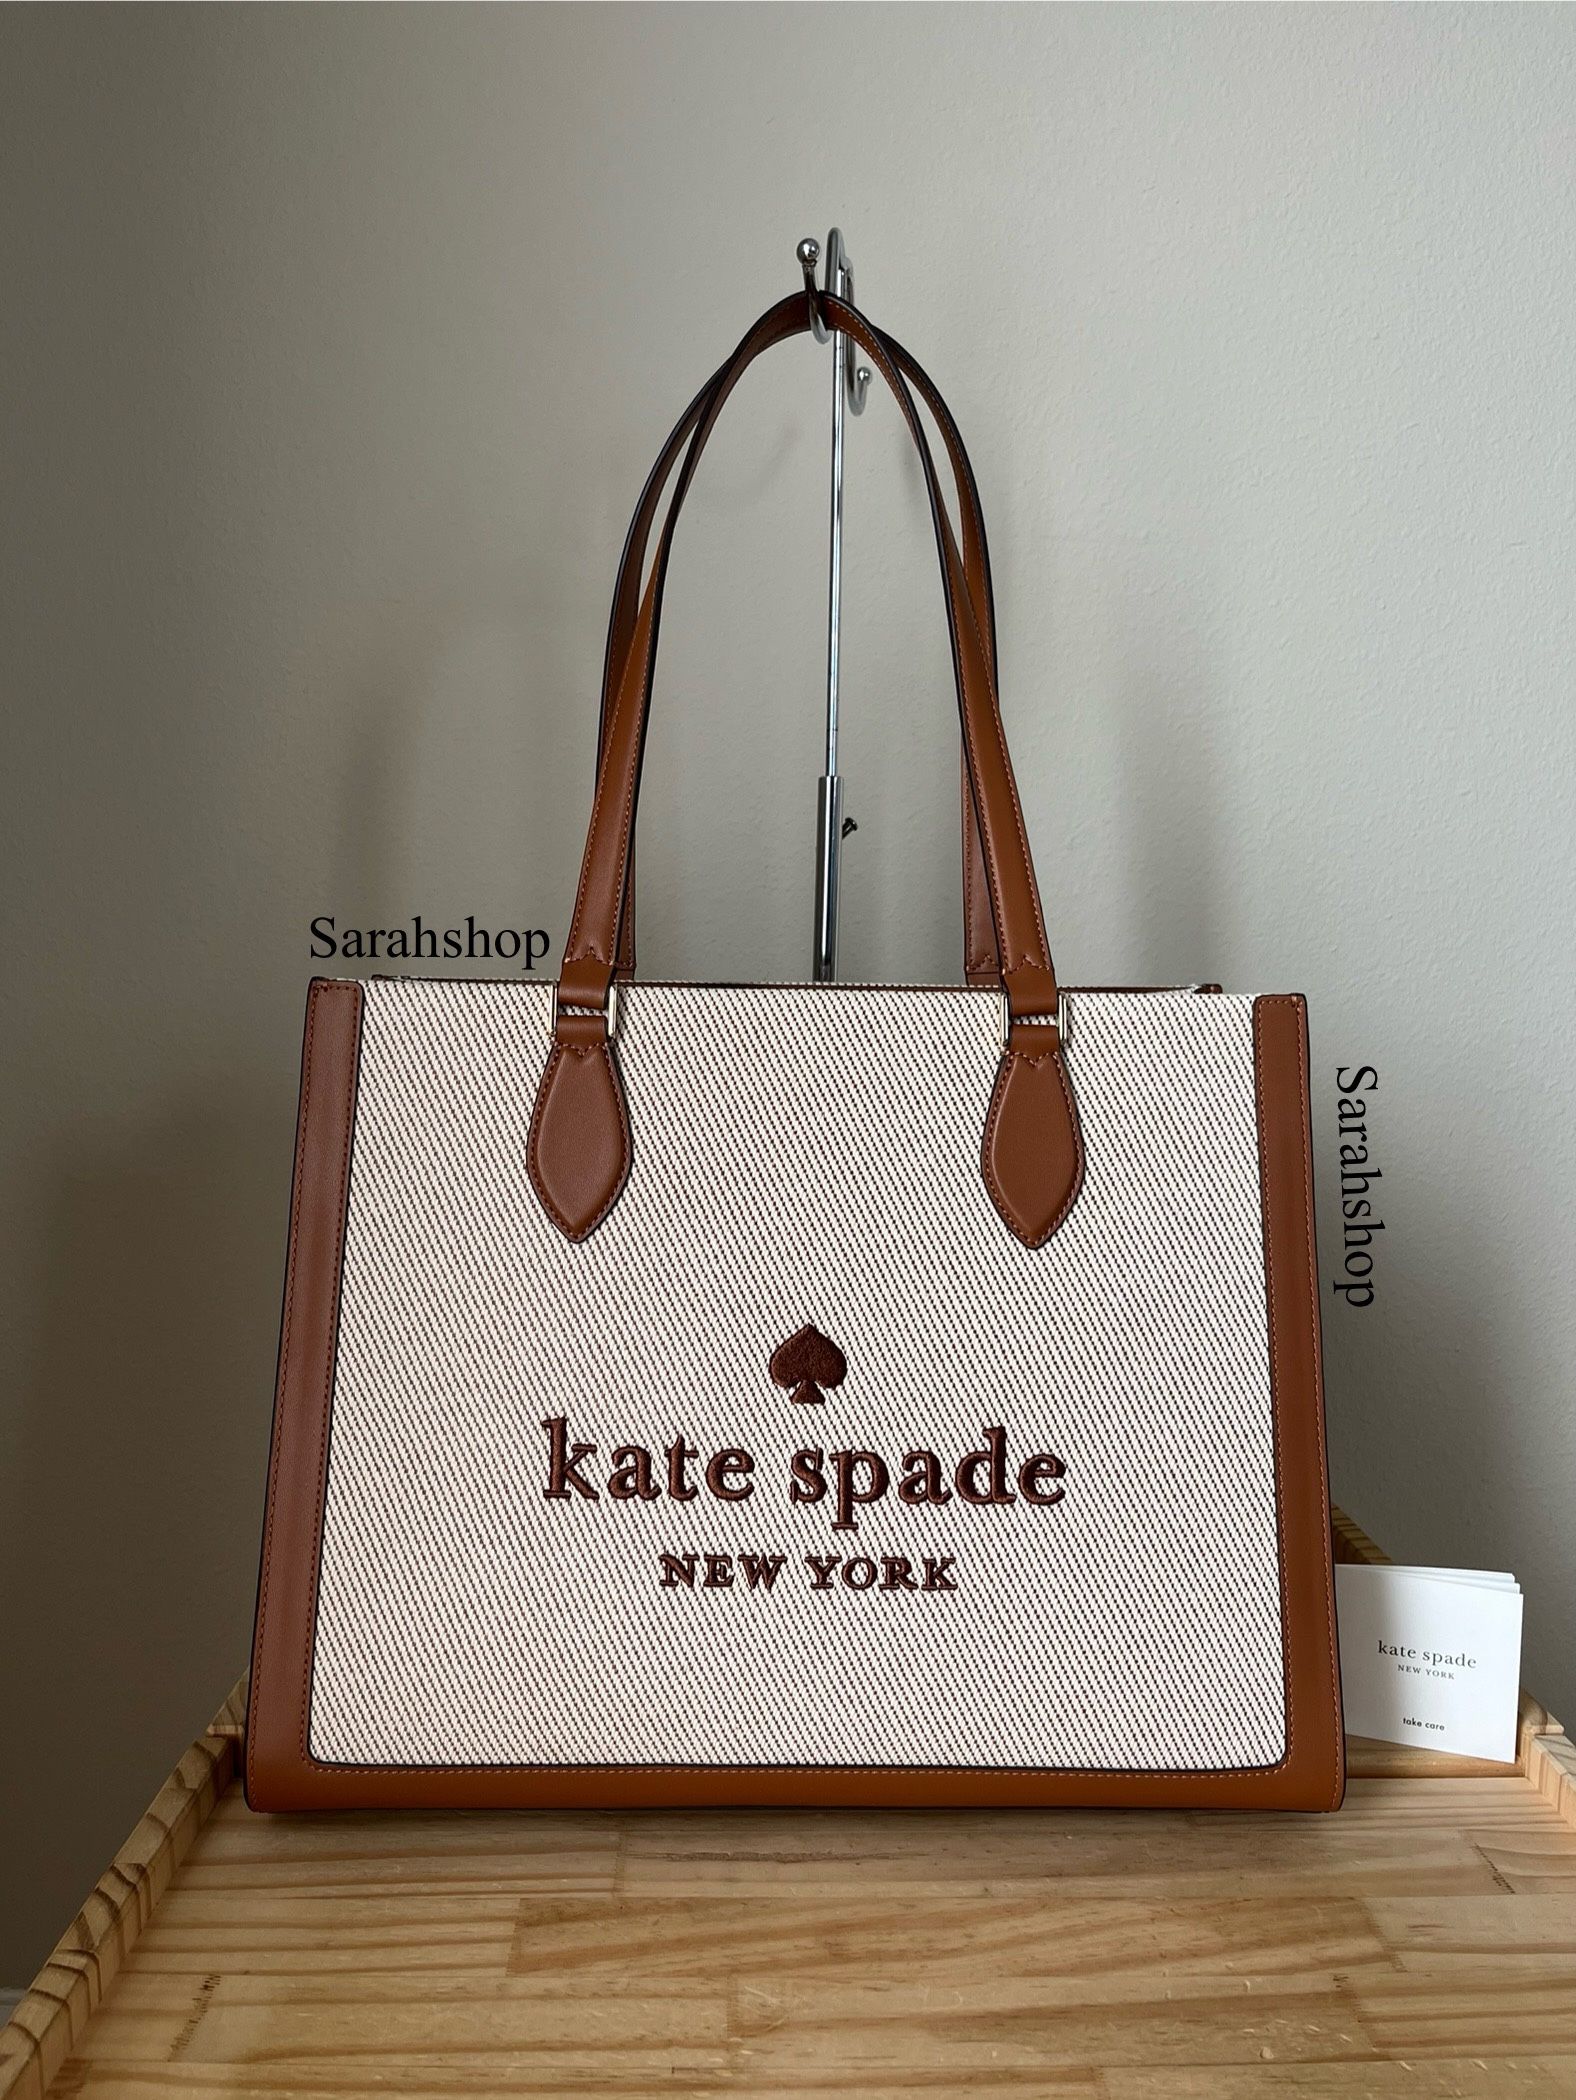 Kate Spade Purse 